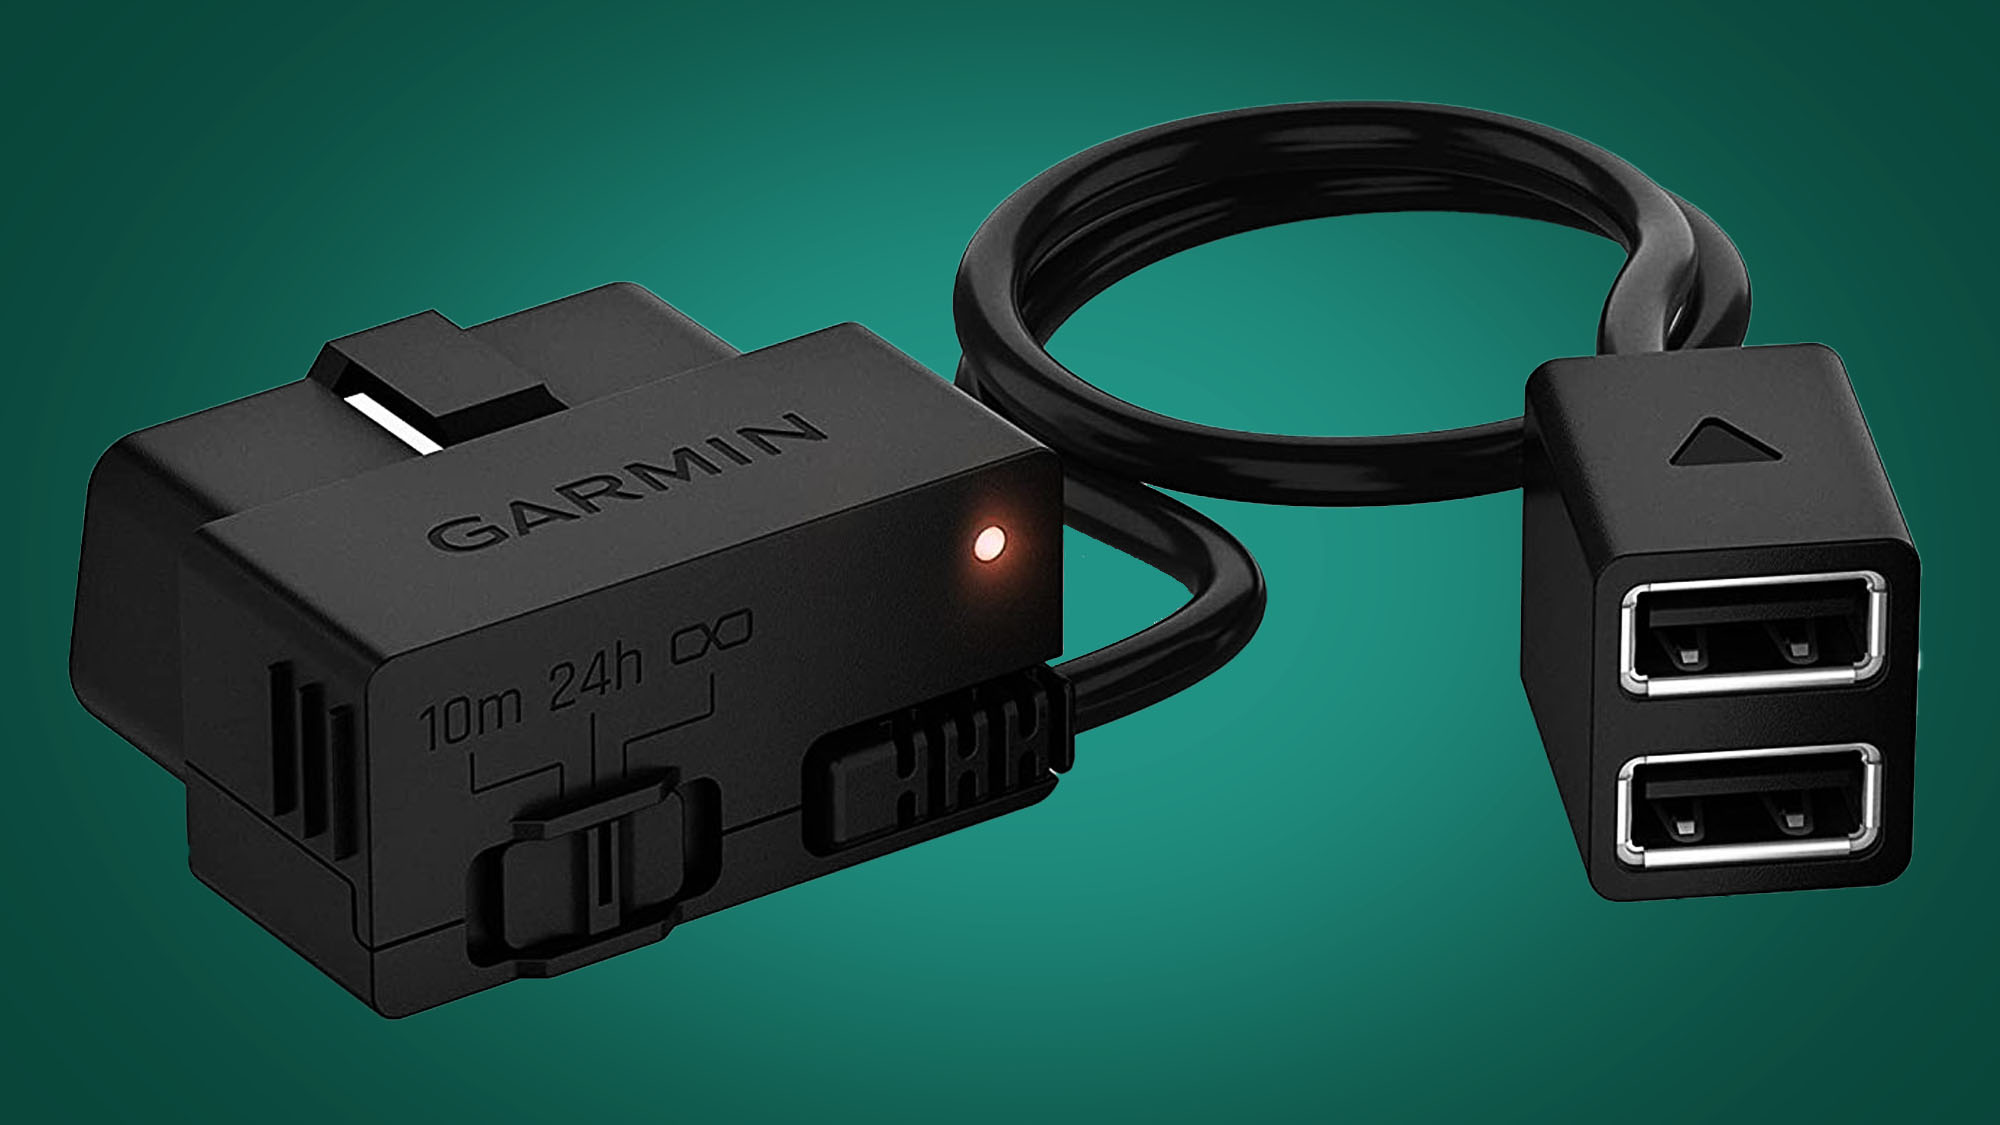 The Garmin Quick Power Adapter for dash cams